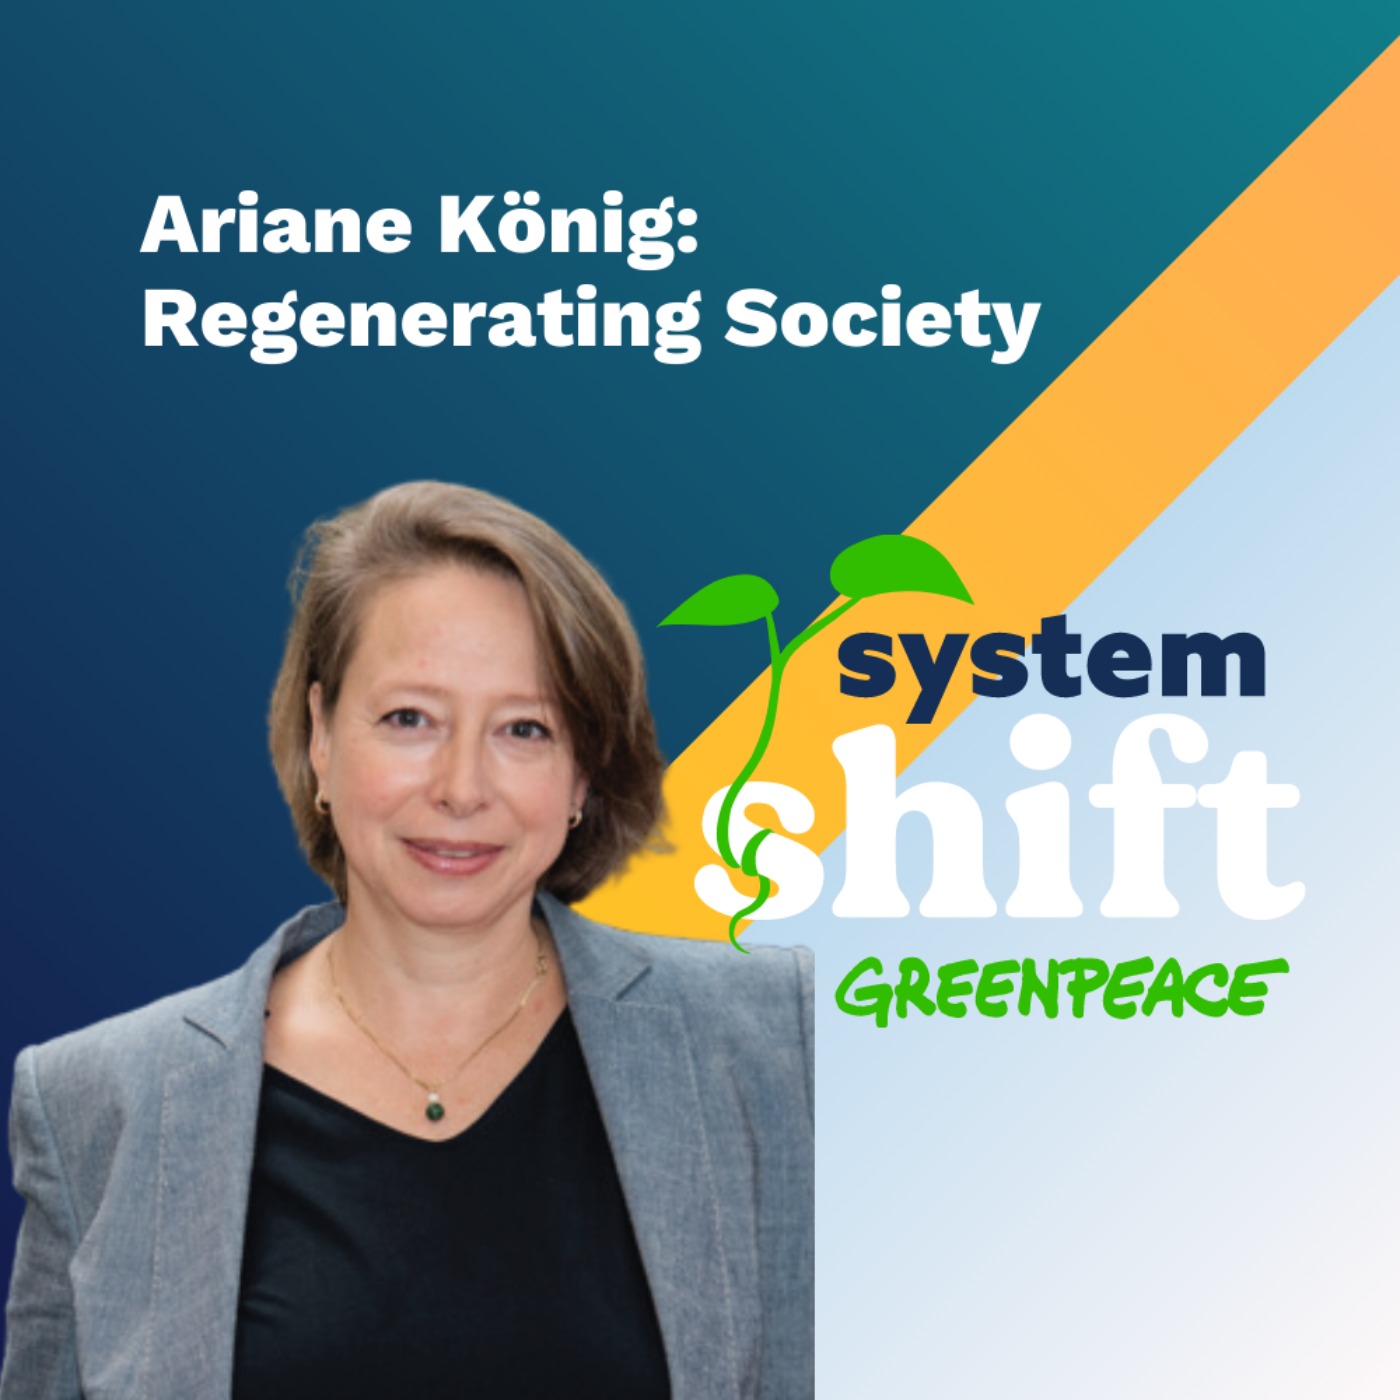 Ariane König: Regenerating Society